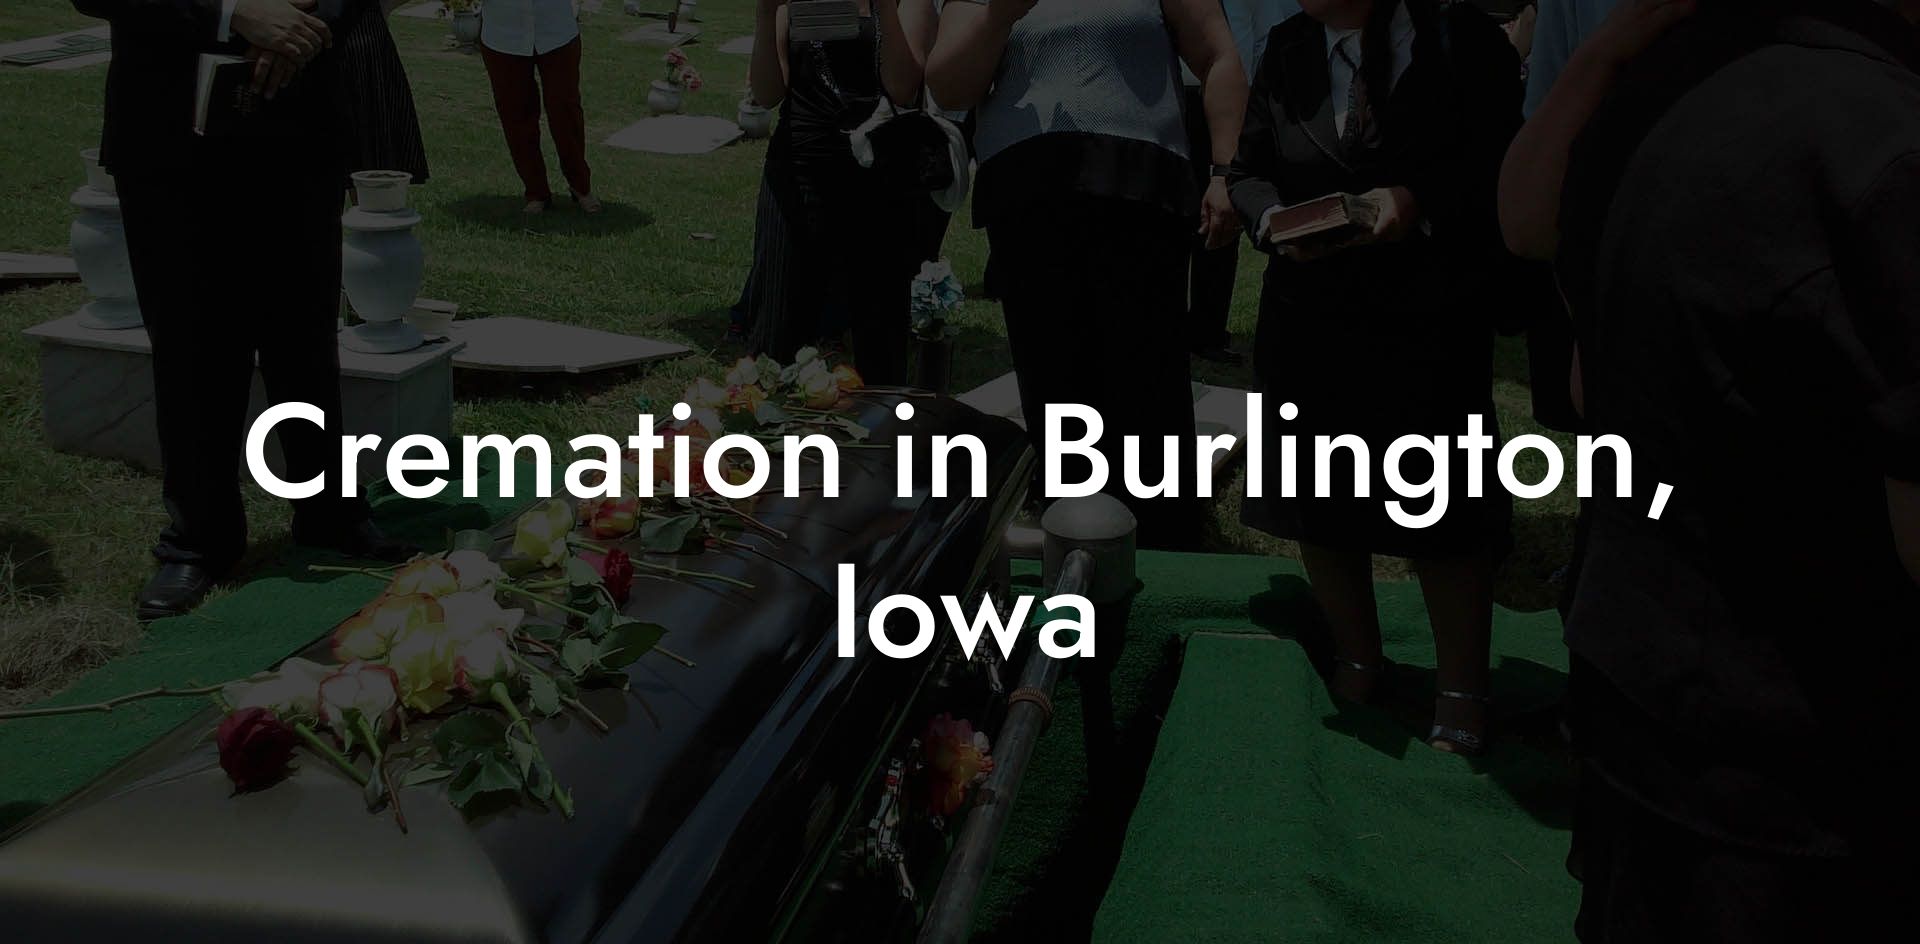 Cremation in Burlington, Iowa